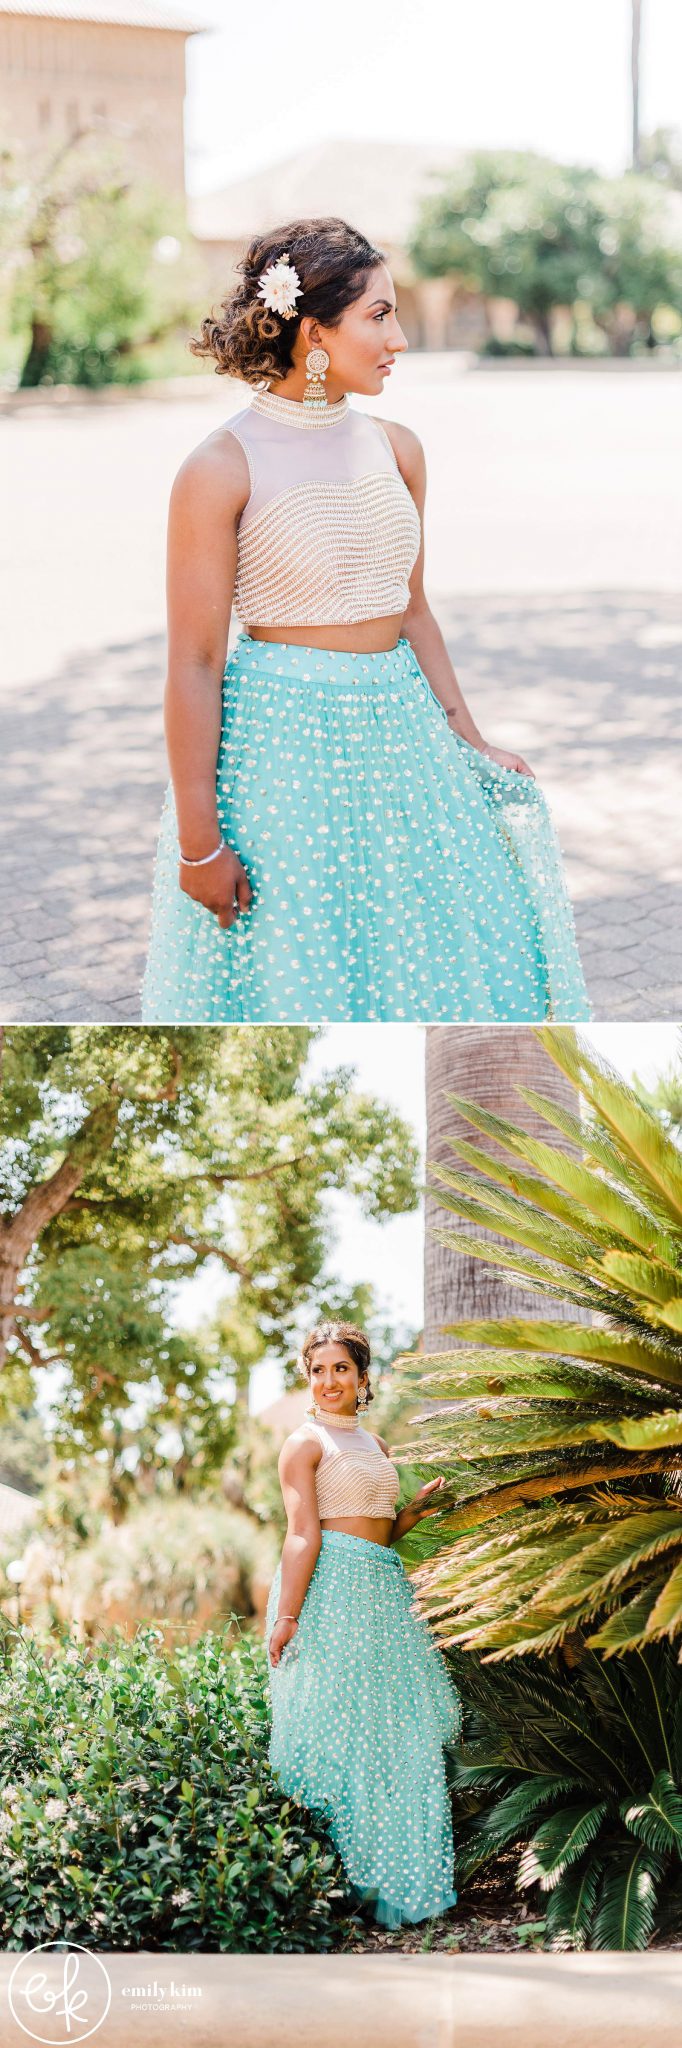 Designer Indian fashion from Neetu Studio Fashion at Stanford, CA